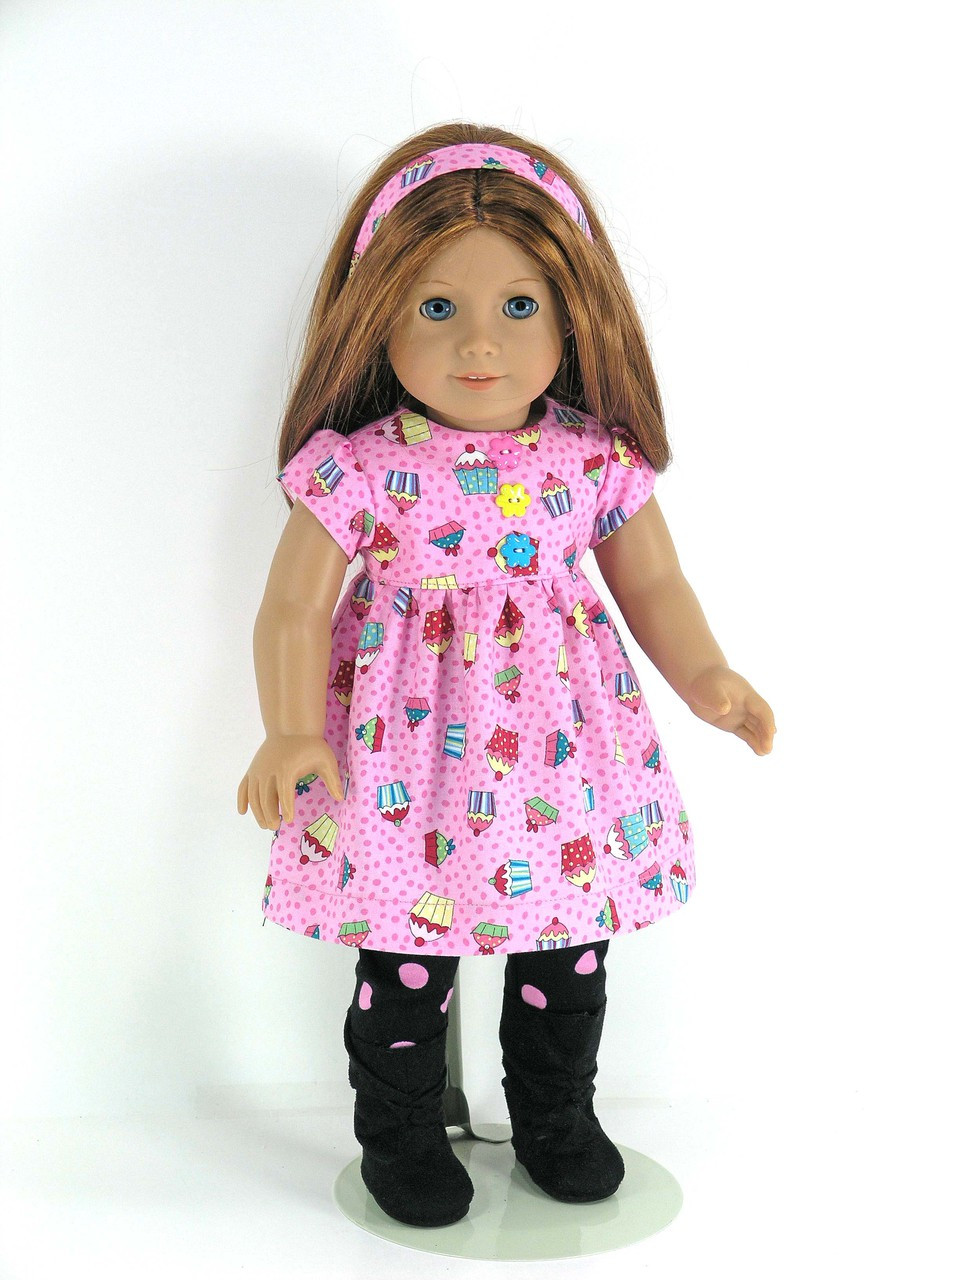 cupcake dress doll